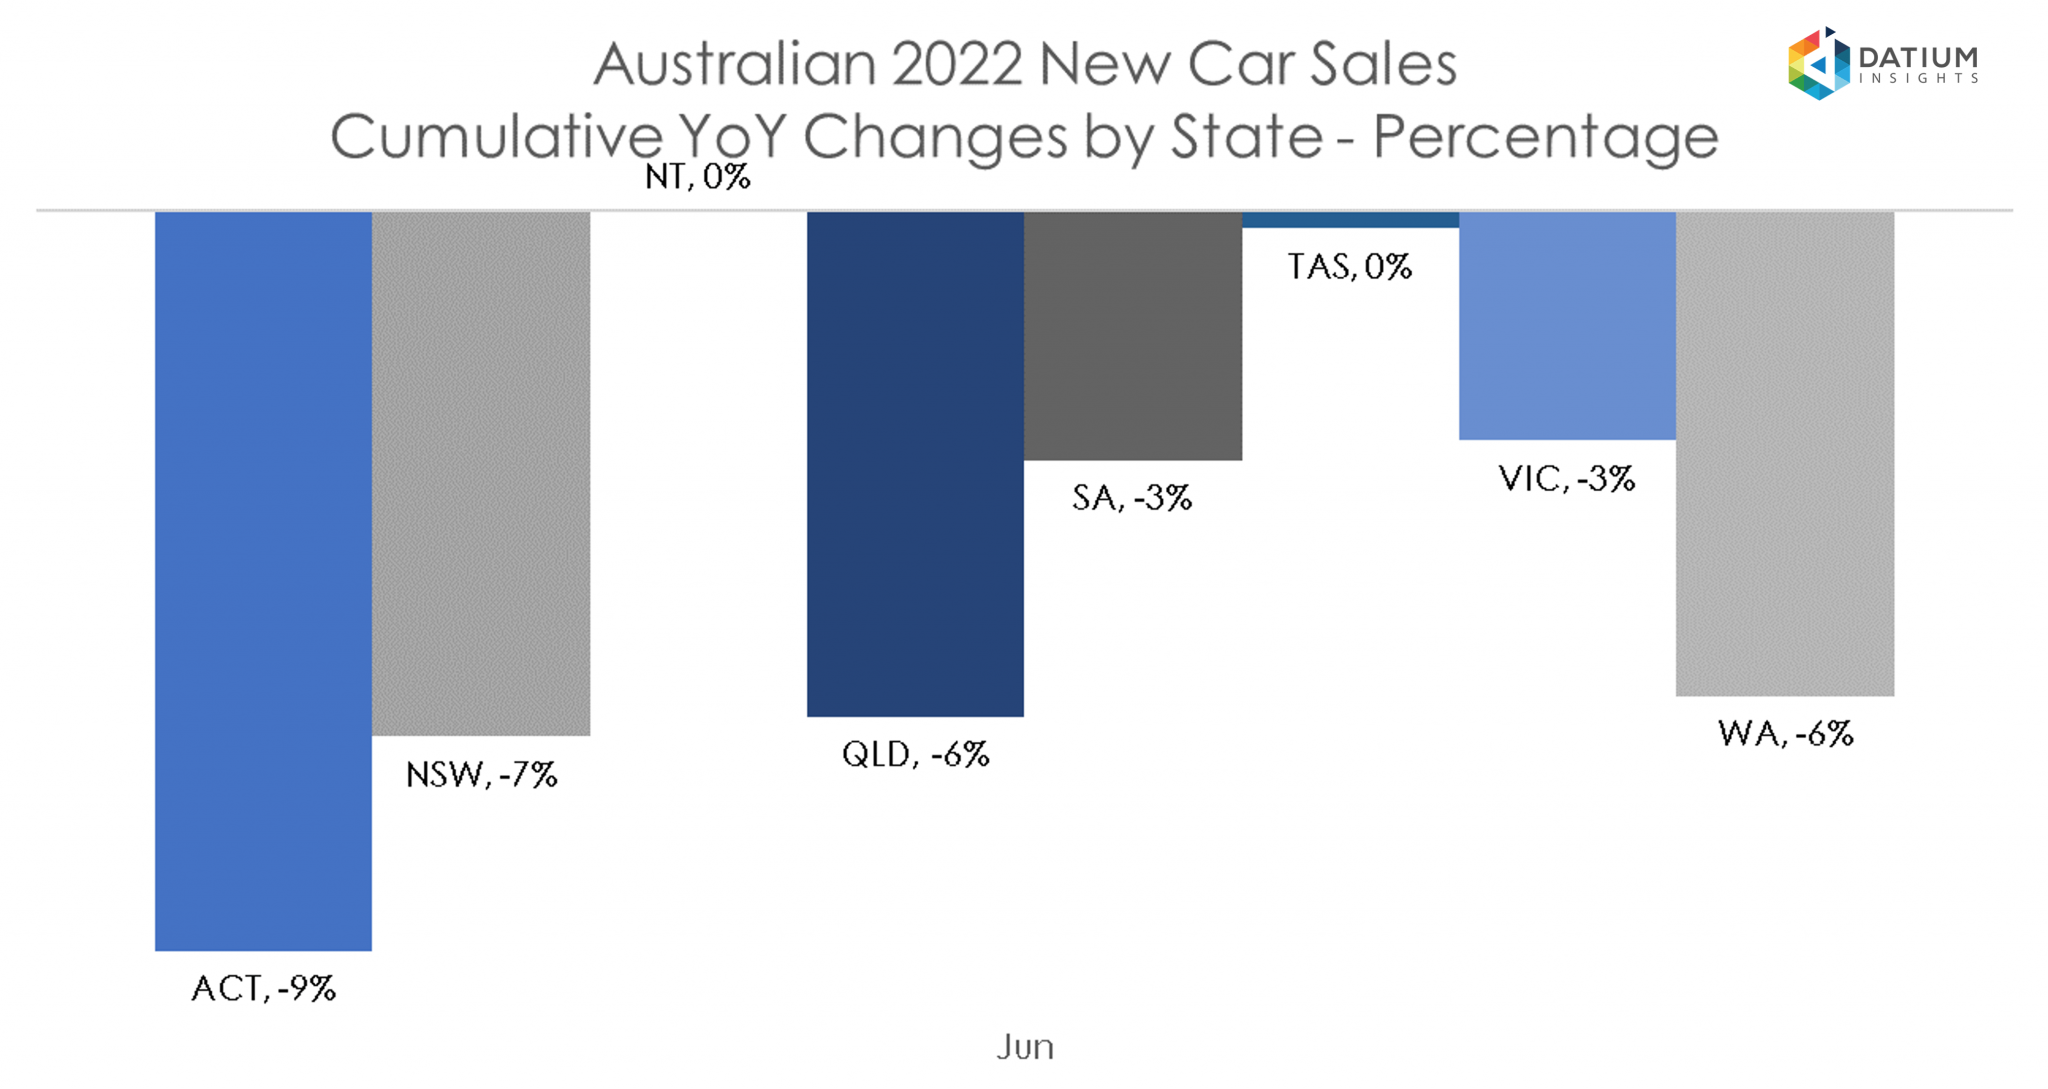 VFACTS New Car Sales Insights June 2022 Datium Insights